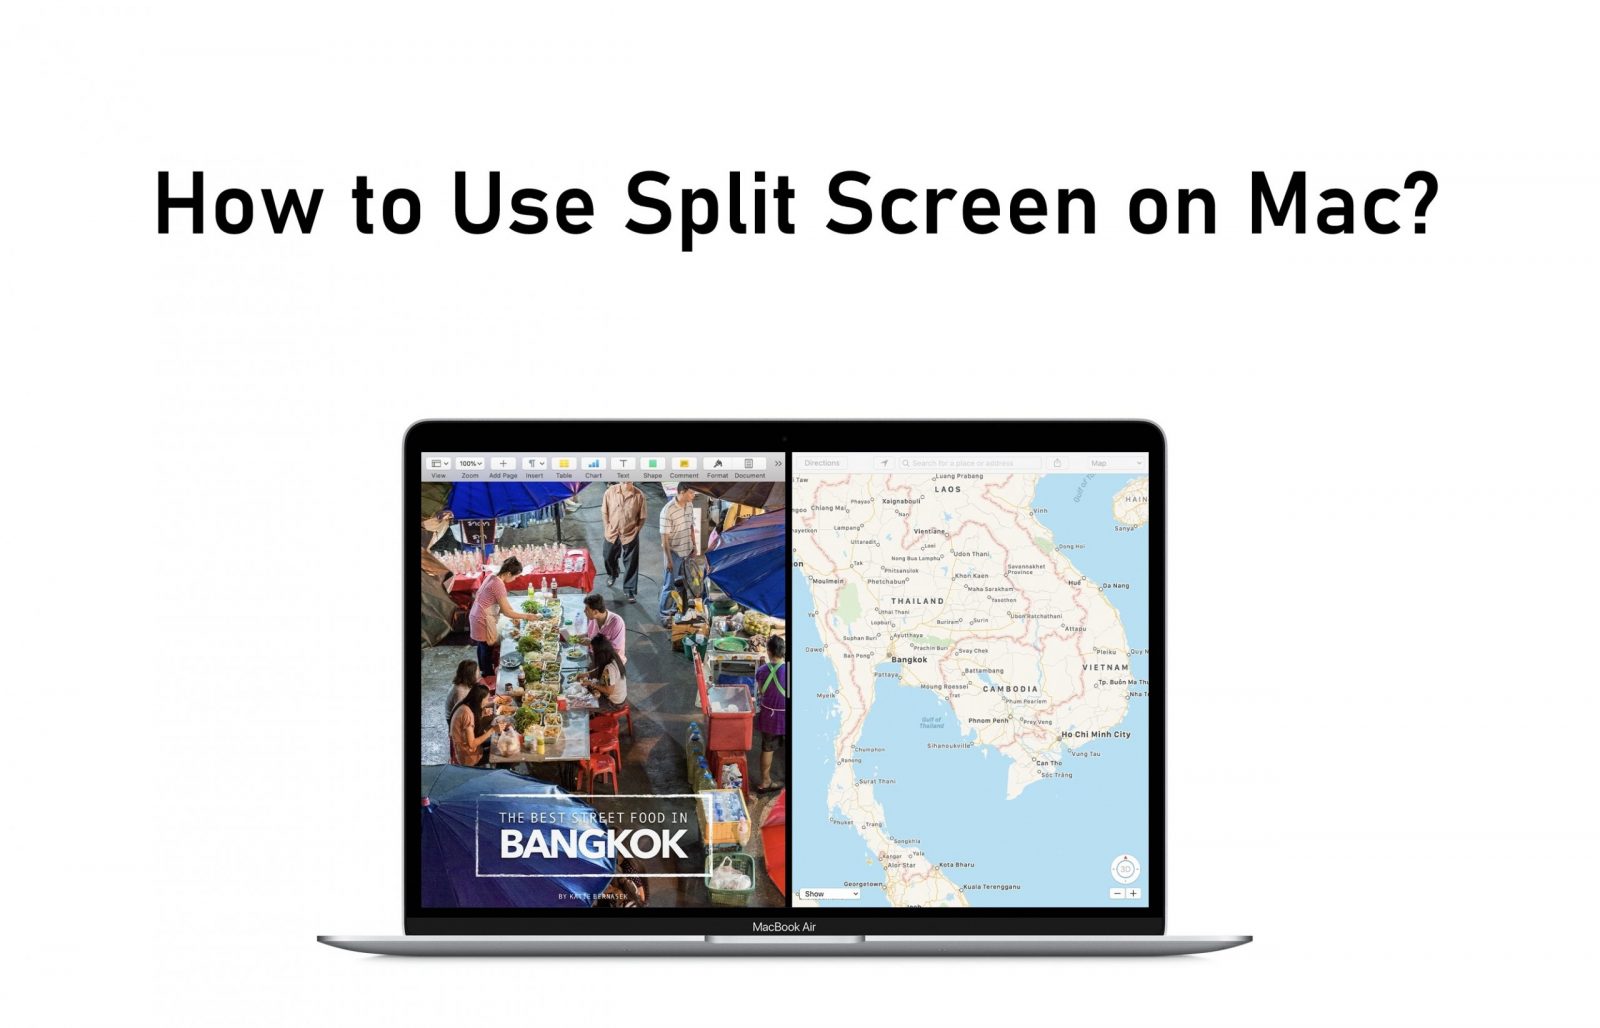 how to split screen on mac